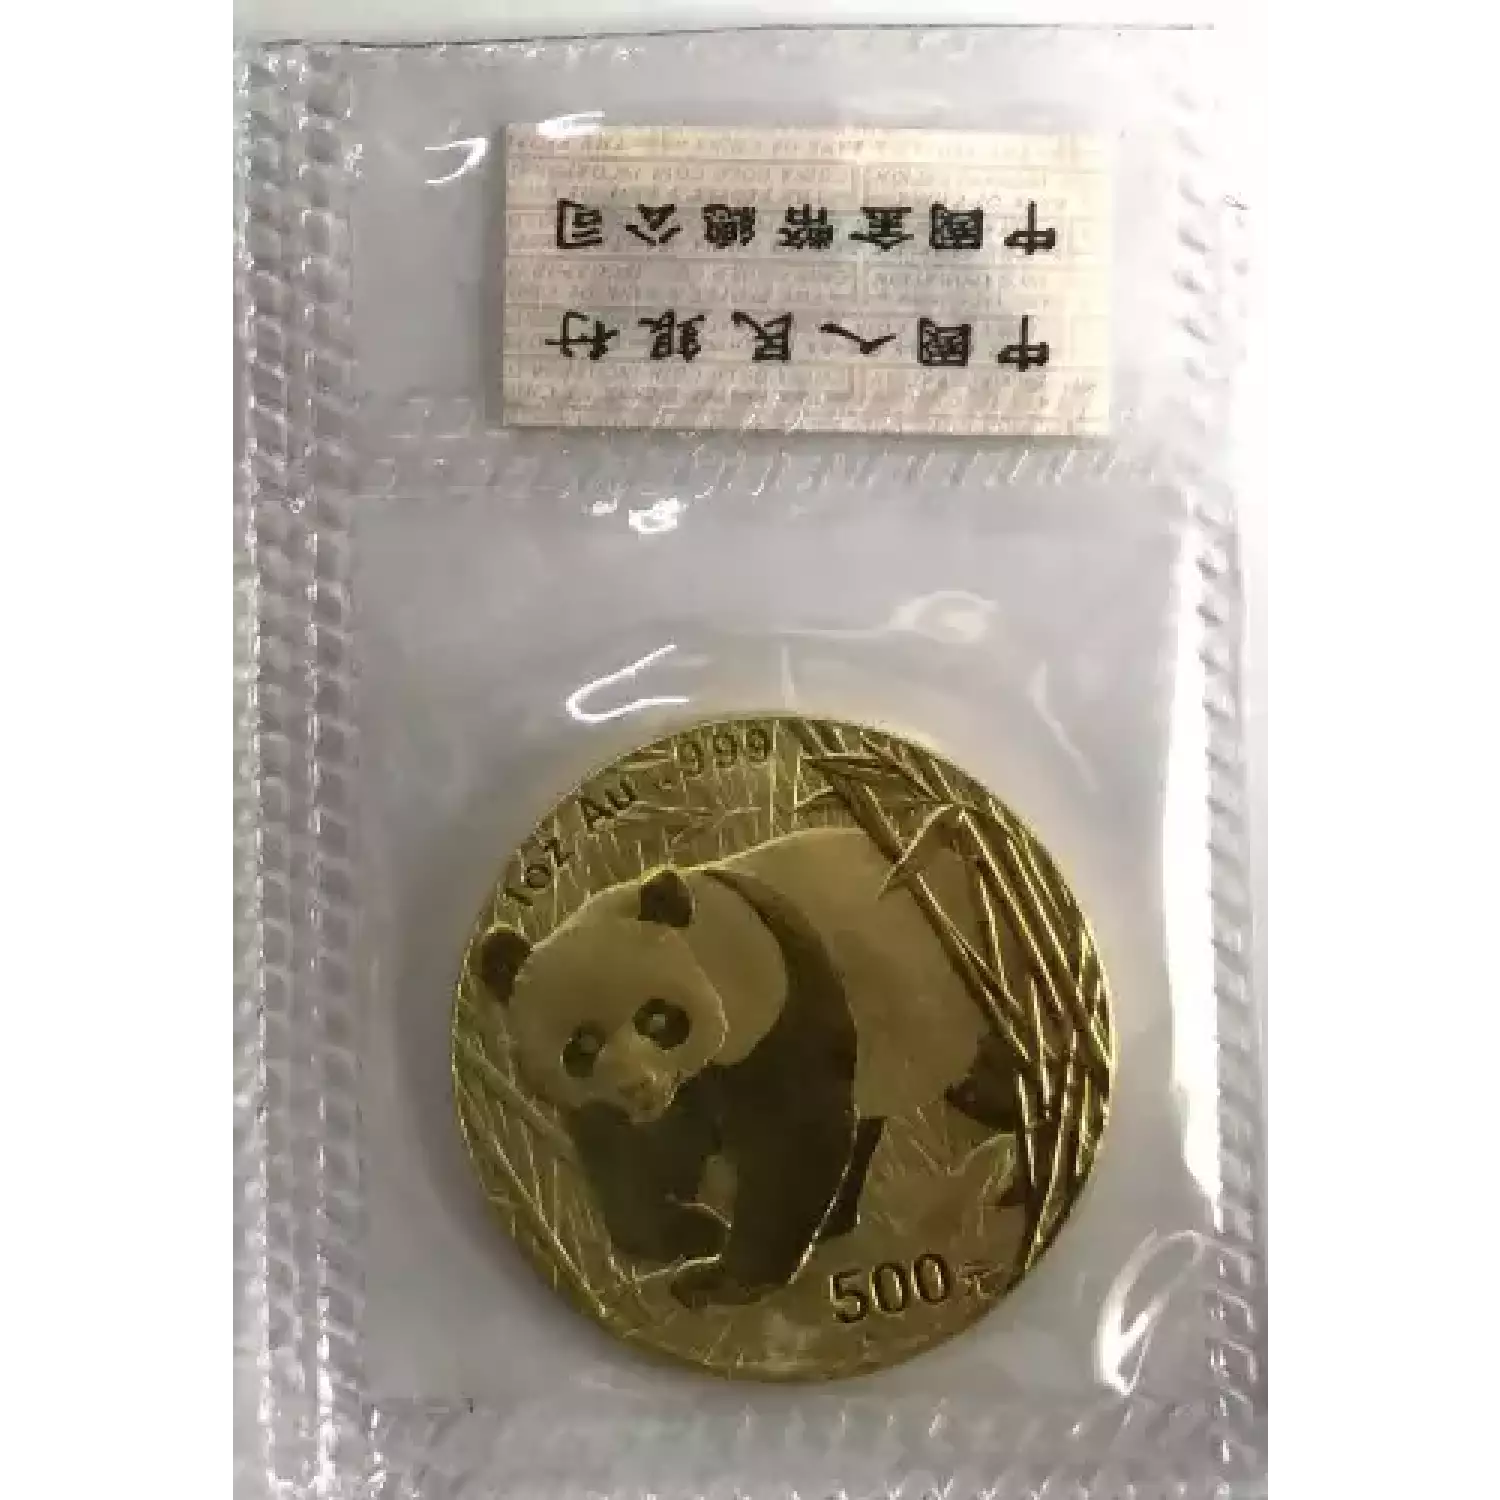 2001 1oz Chinese Gold Panda